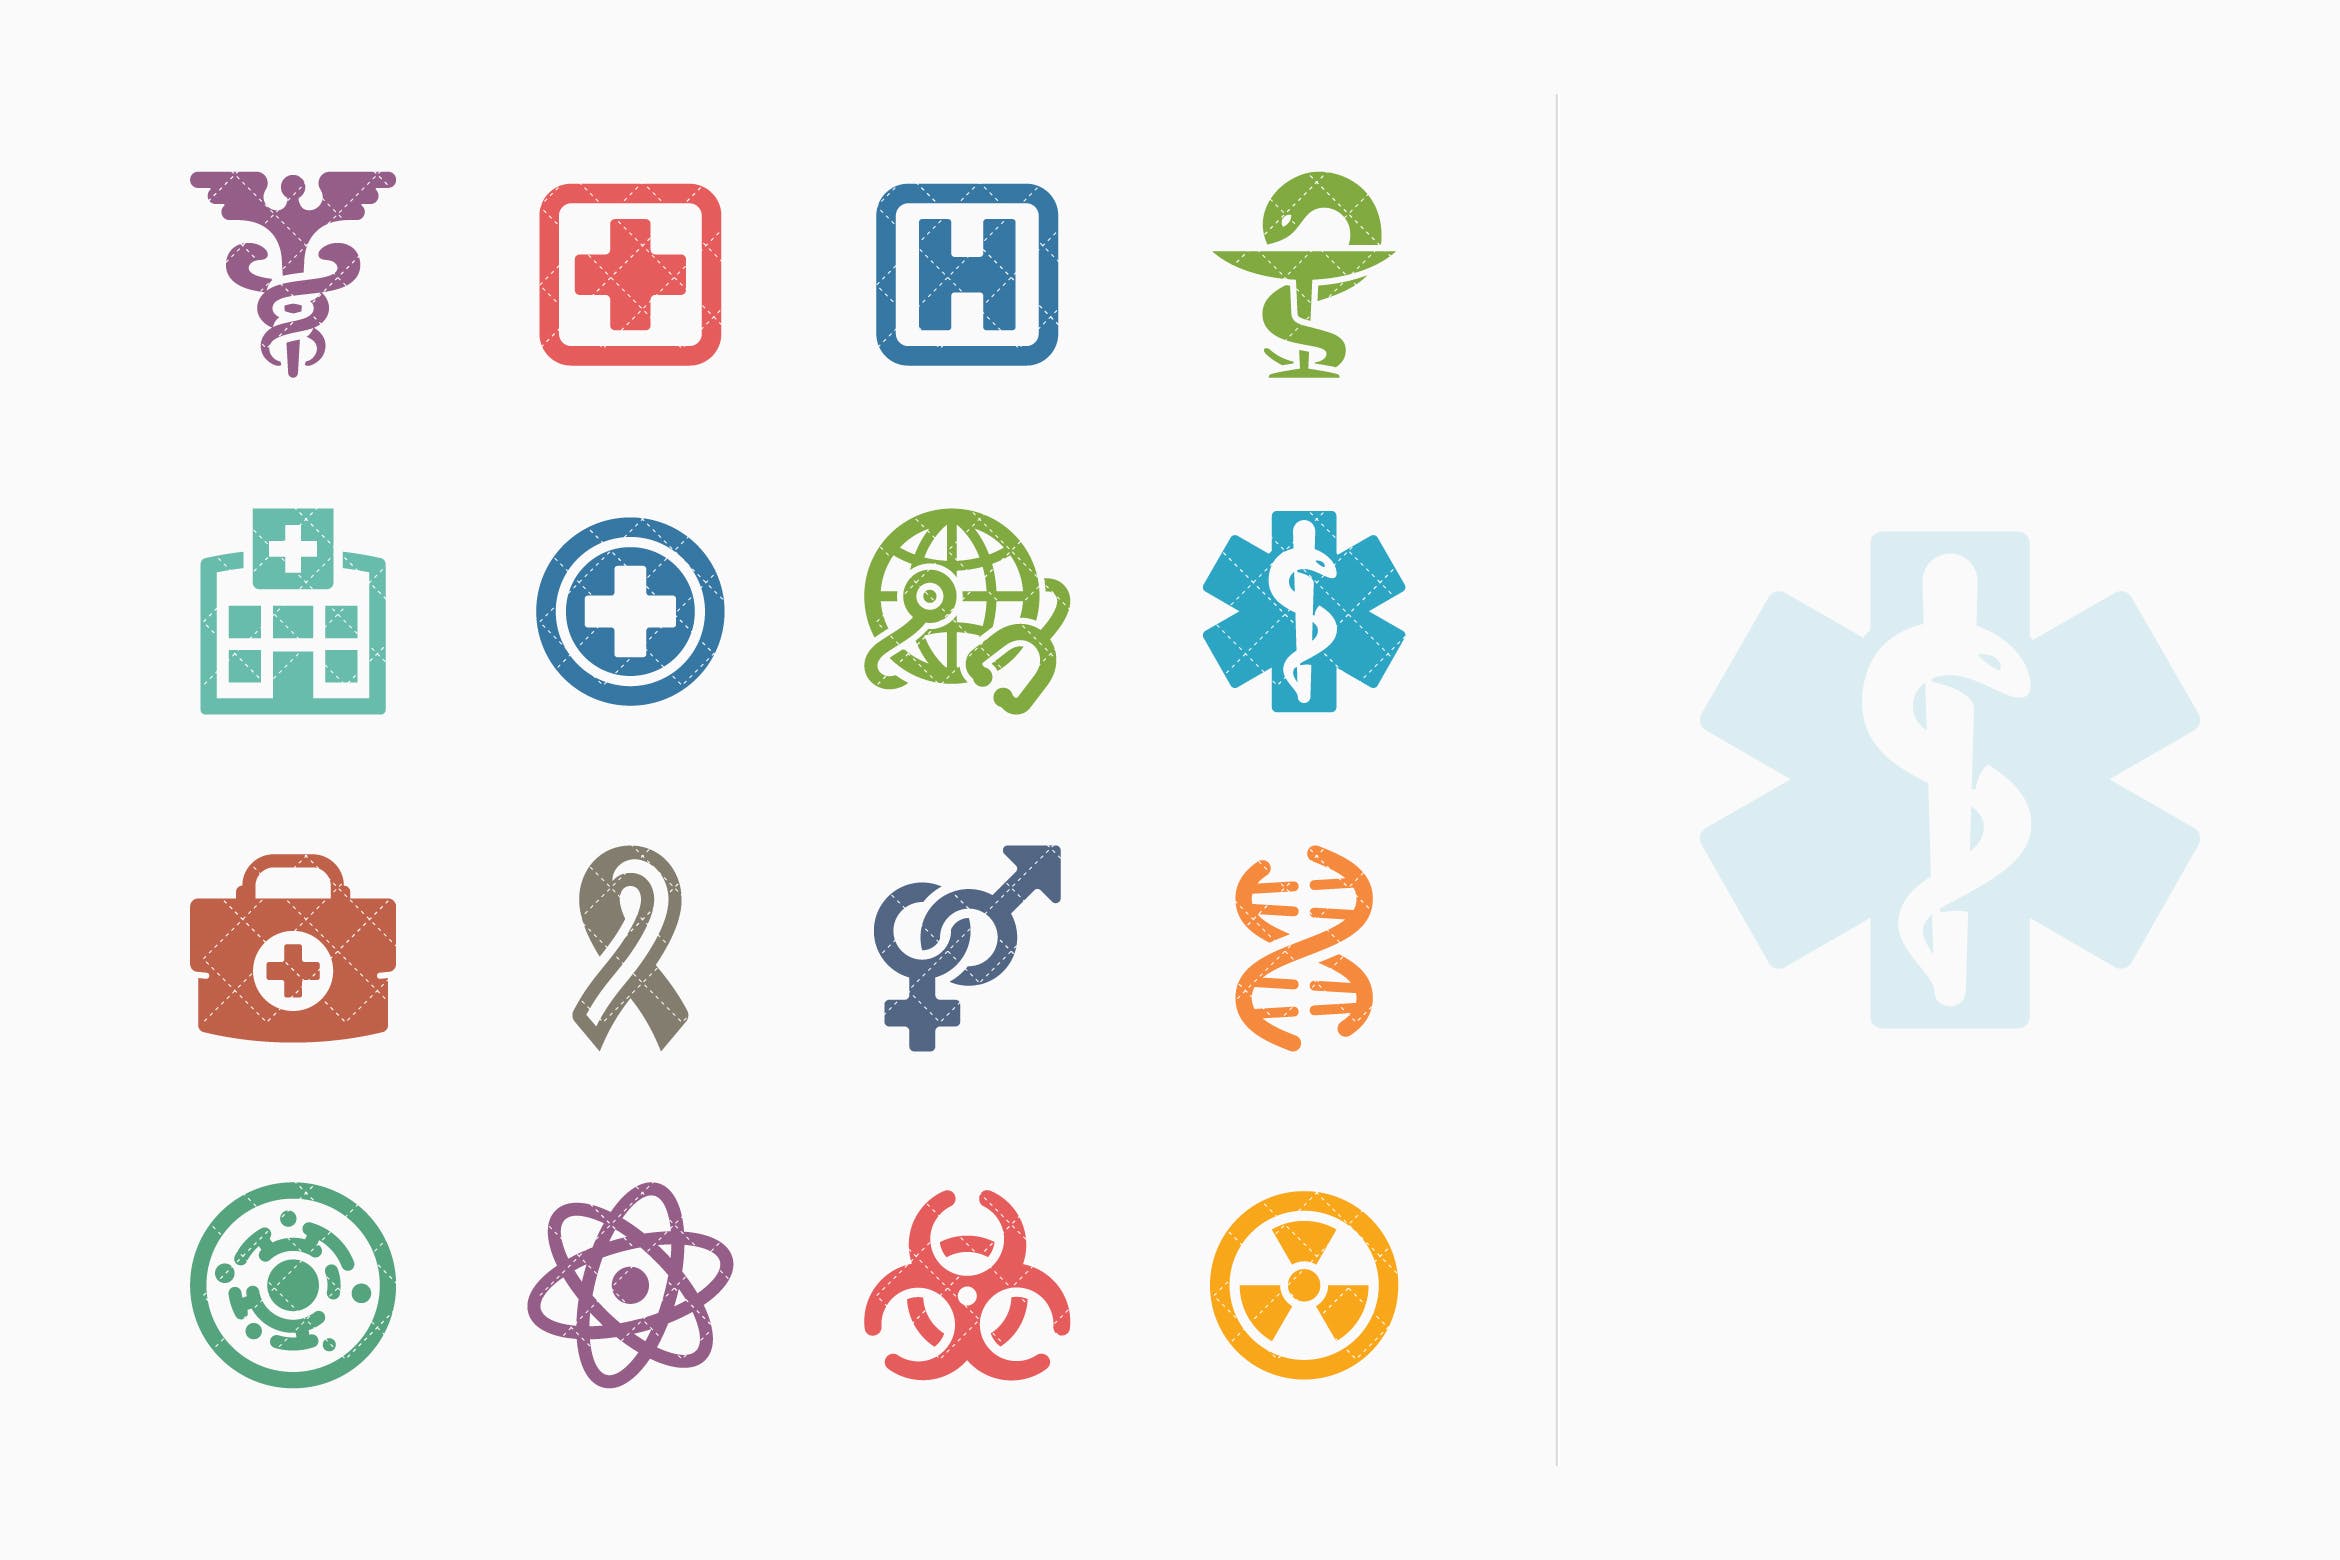 Colored系列-医疗保健主题矢量第一素材精选图标集v1 Medical & Health Care Icons Set 1 – Colored Series插图